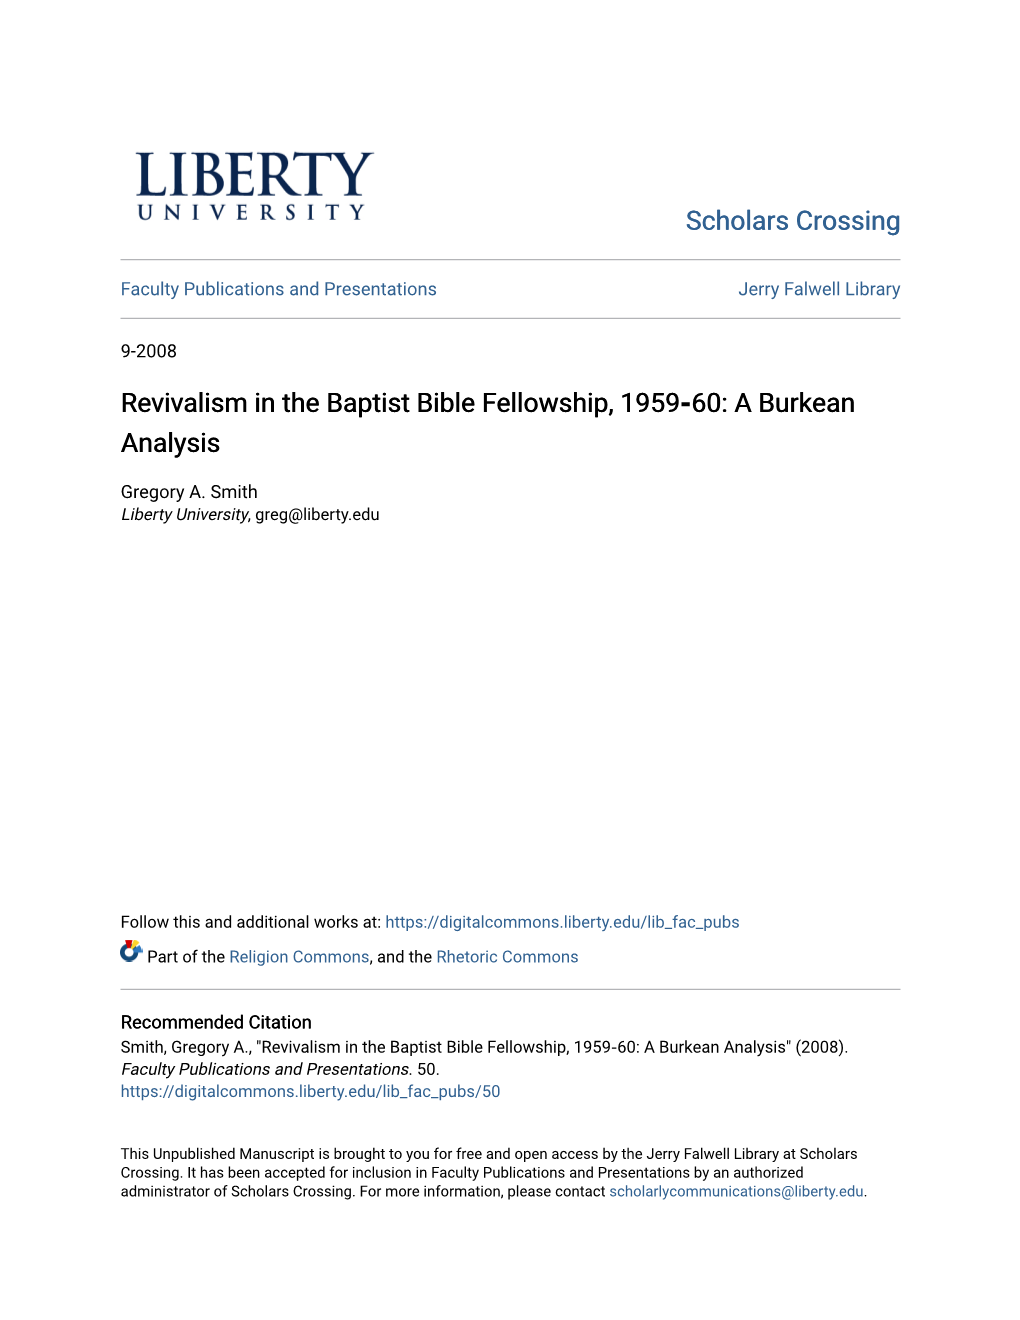 Scholars Crossing Revivalism in the Baptist Bible Fellowship, 1959-60